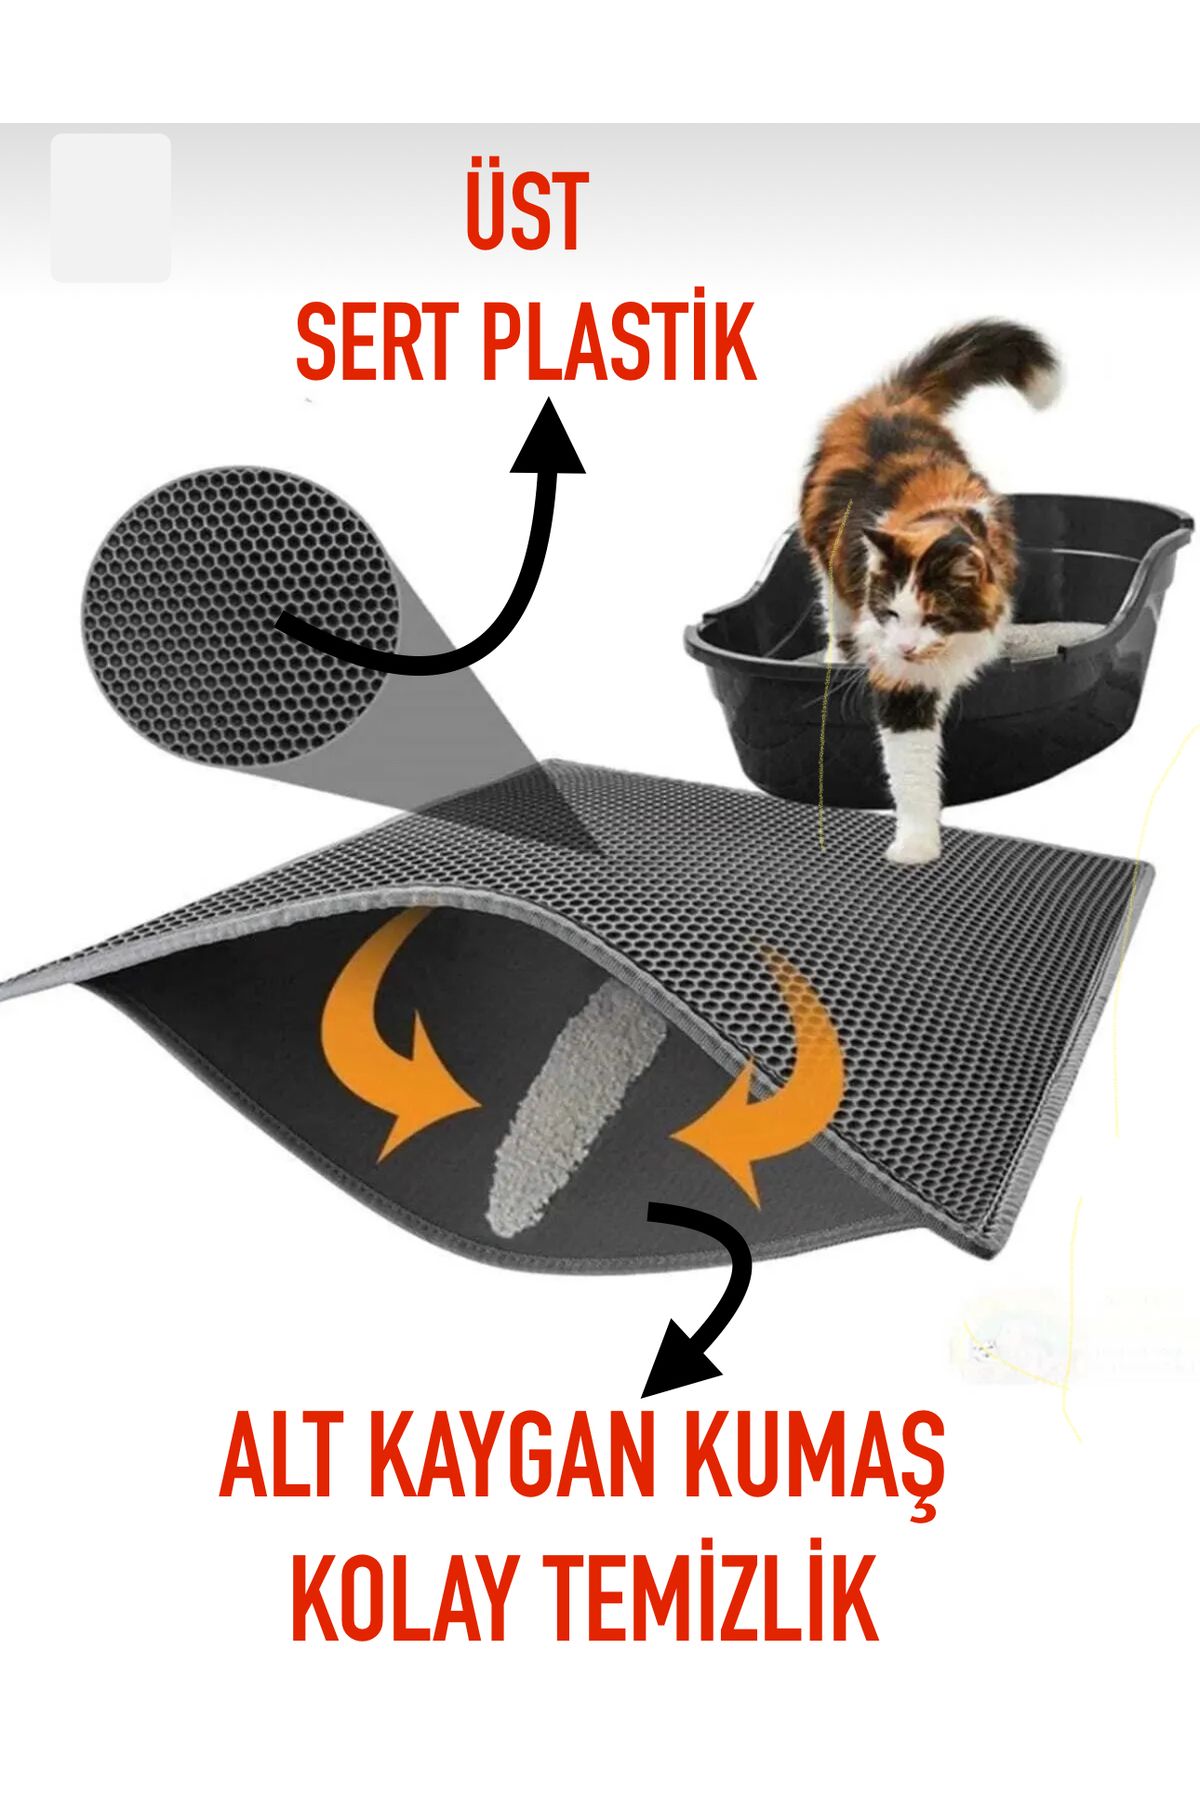 Aka Üst Sert Plastiktir Elekli Kedi Paspası Kedi Köpek Tuvalet Önü Paspas Elekli Kedi Kumu Önü Paspası